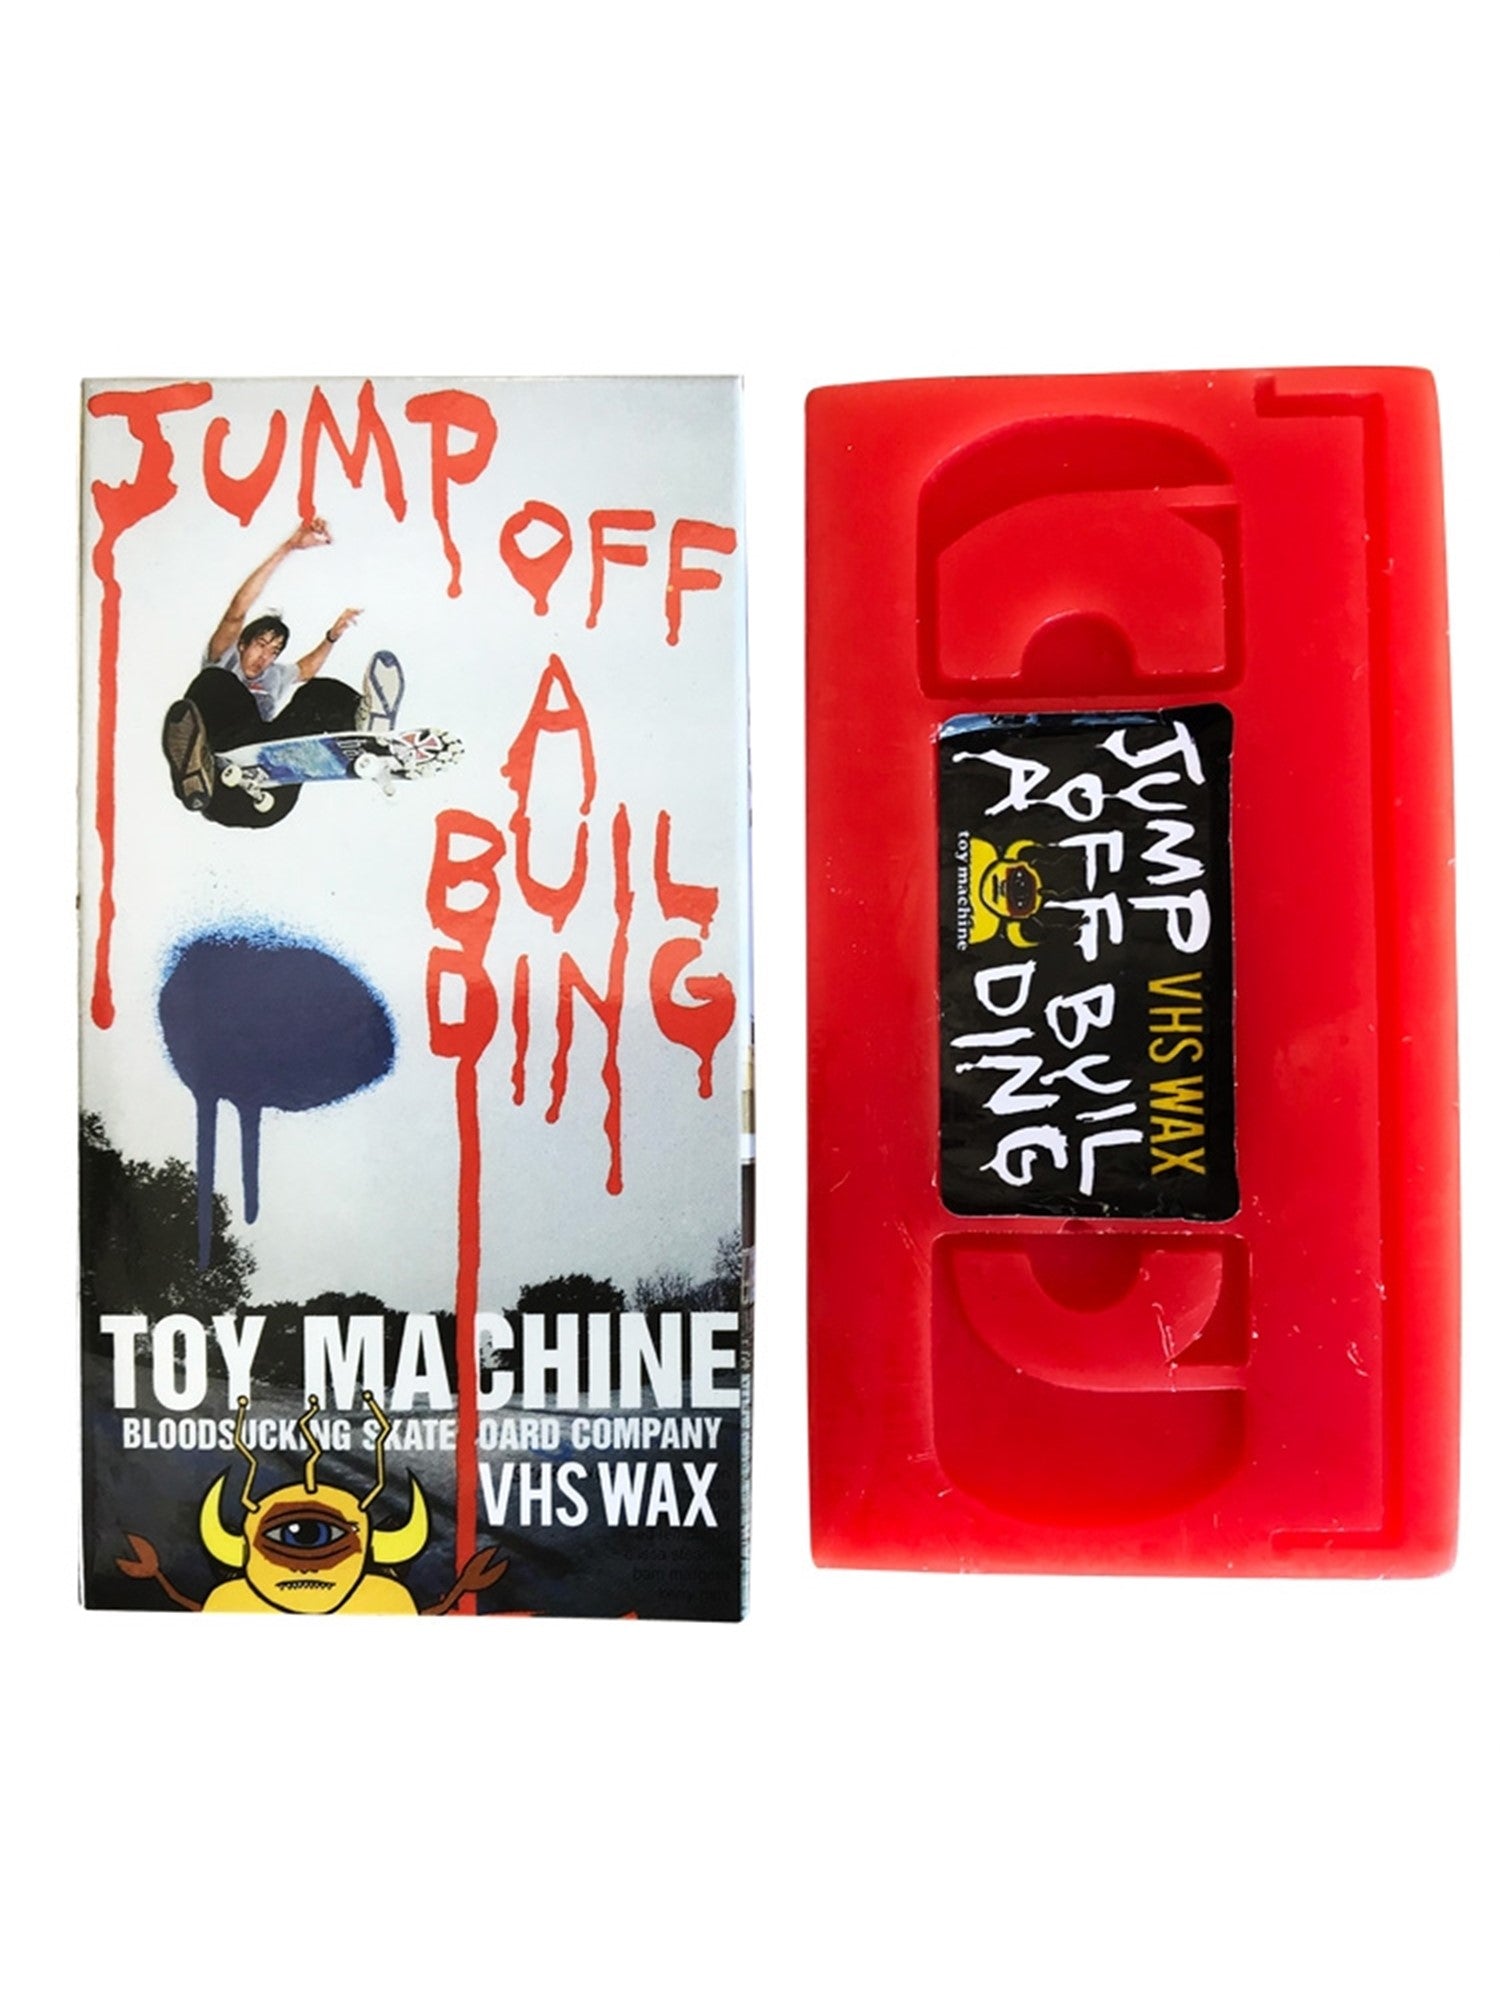 Toy Machine Jump off a Building VHS Wax